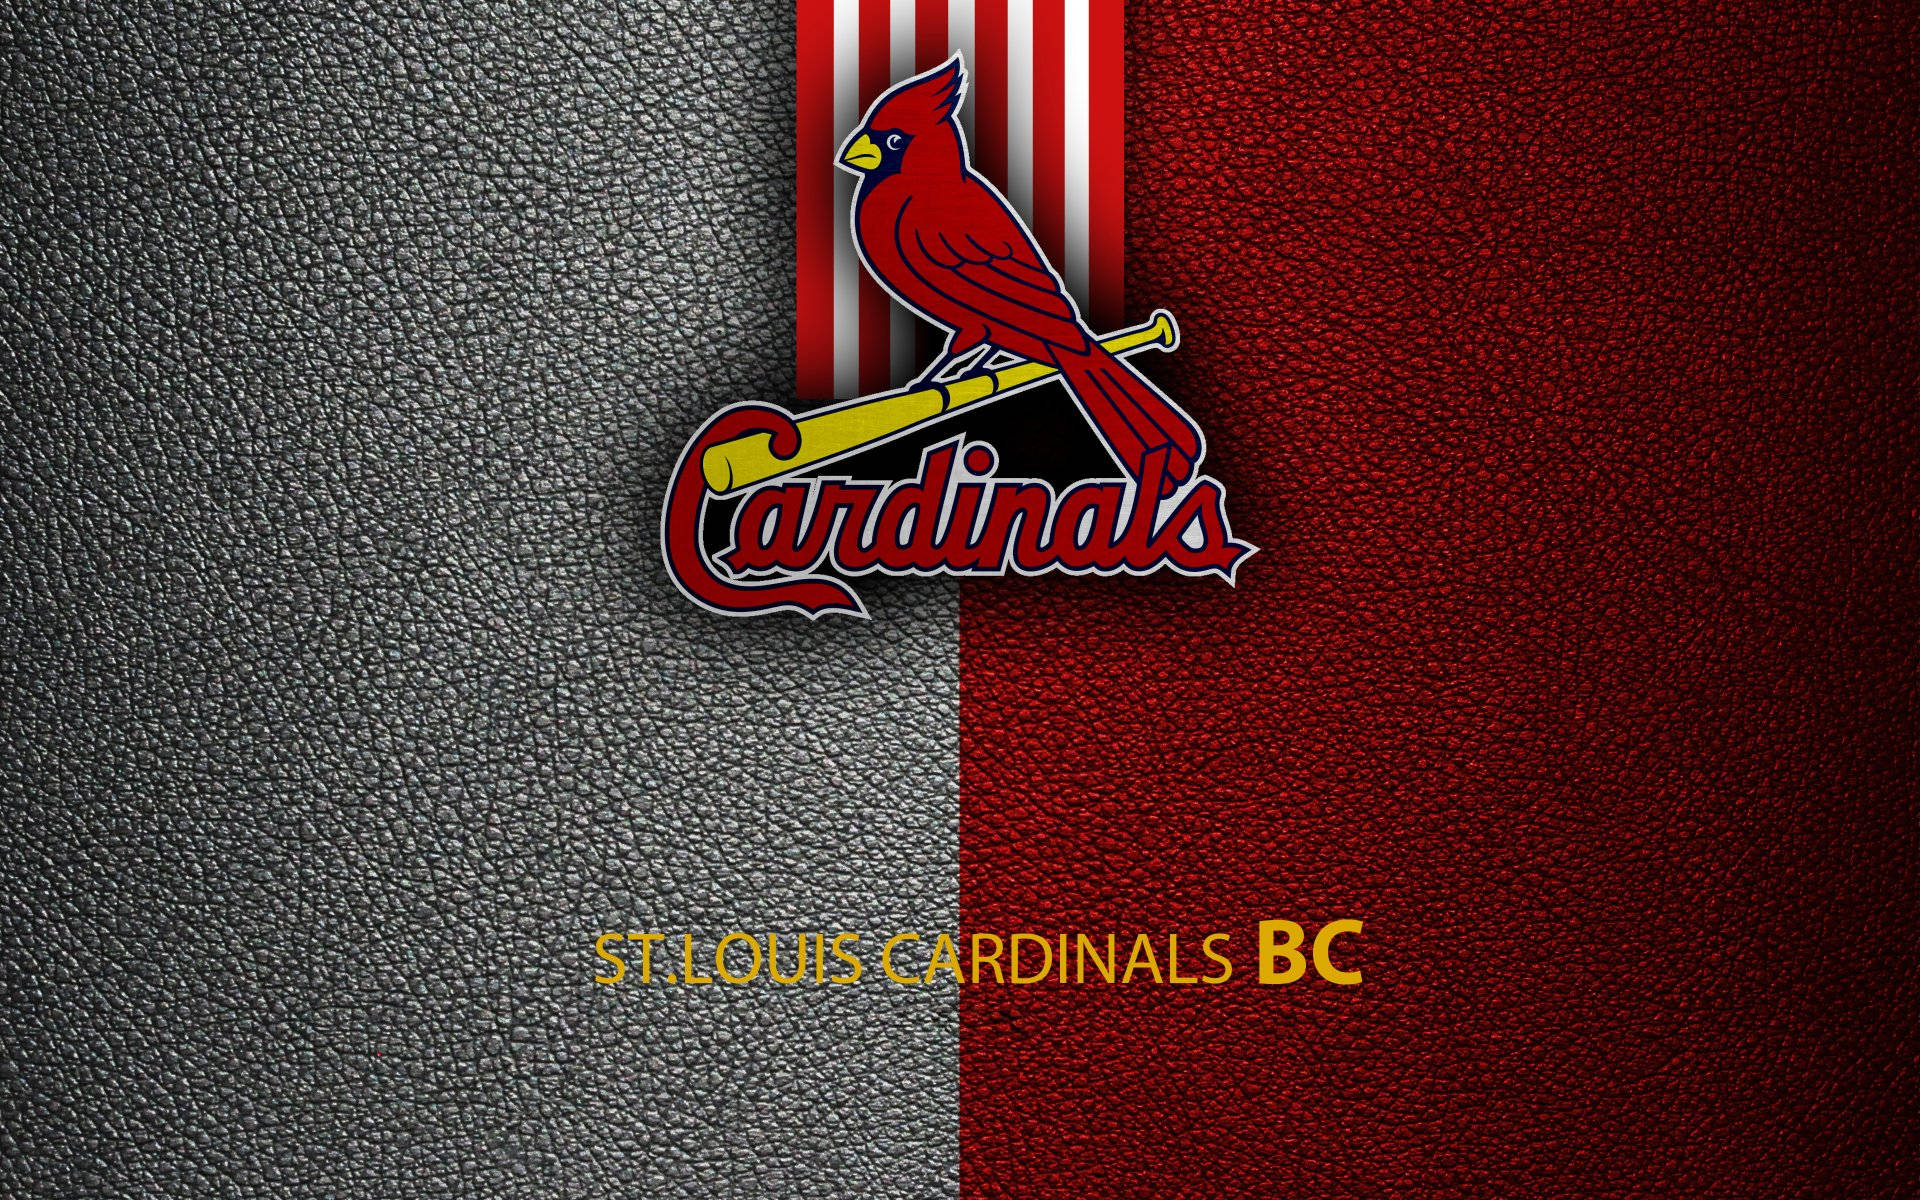 St Louis Cardinals BC Wallpaper